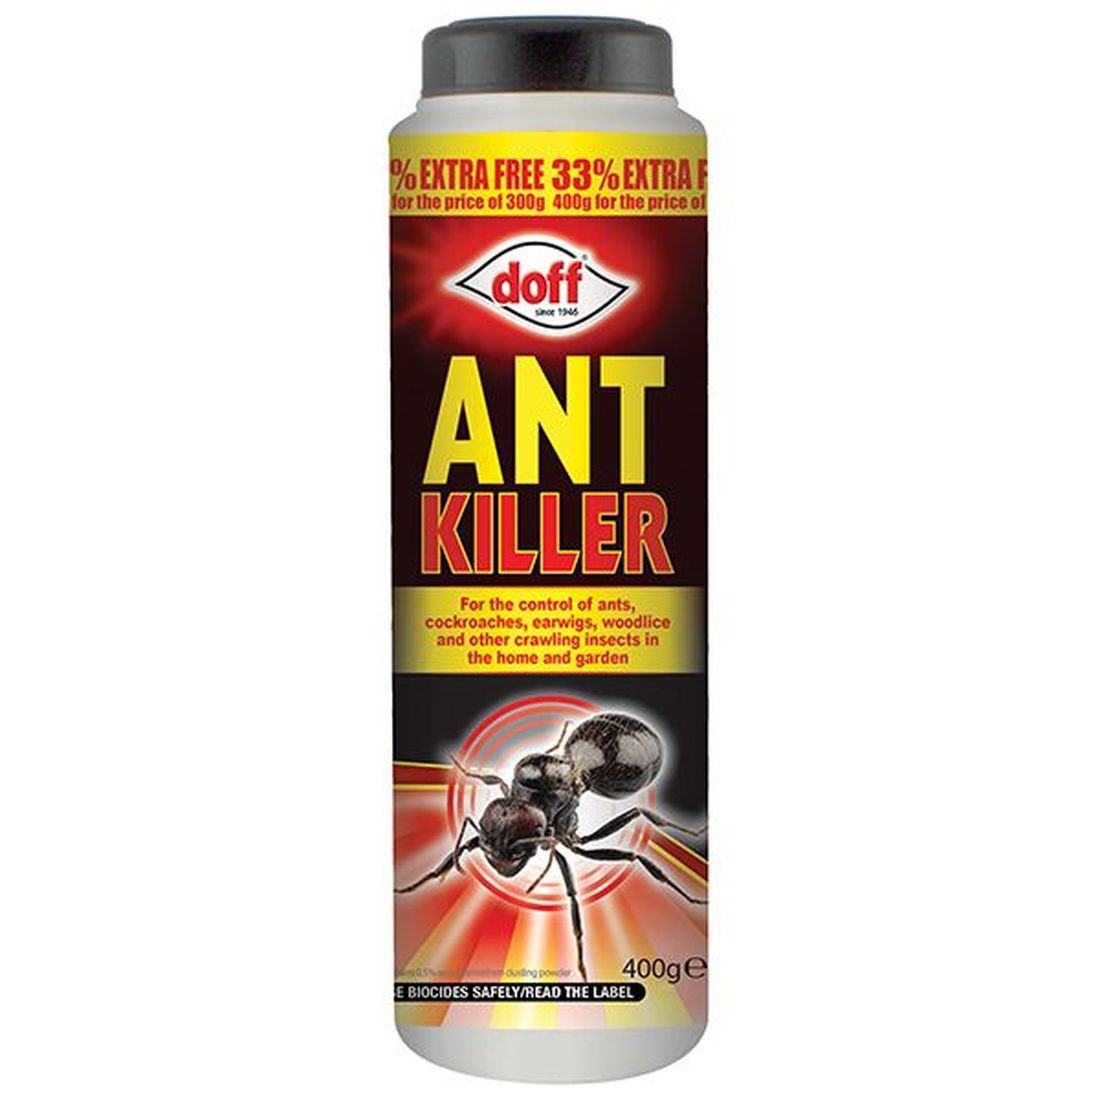 DOFF Ant Killer 300g + 33% Extra Free  